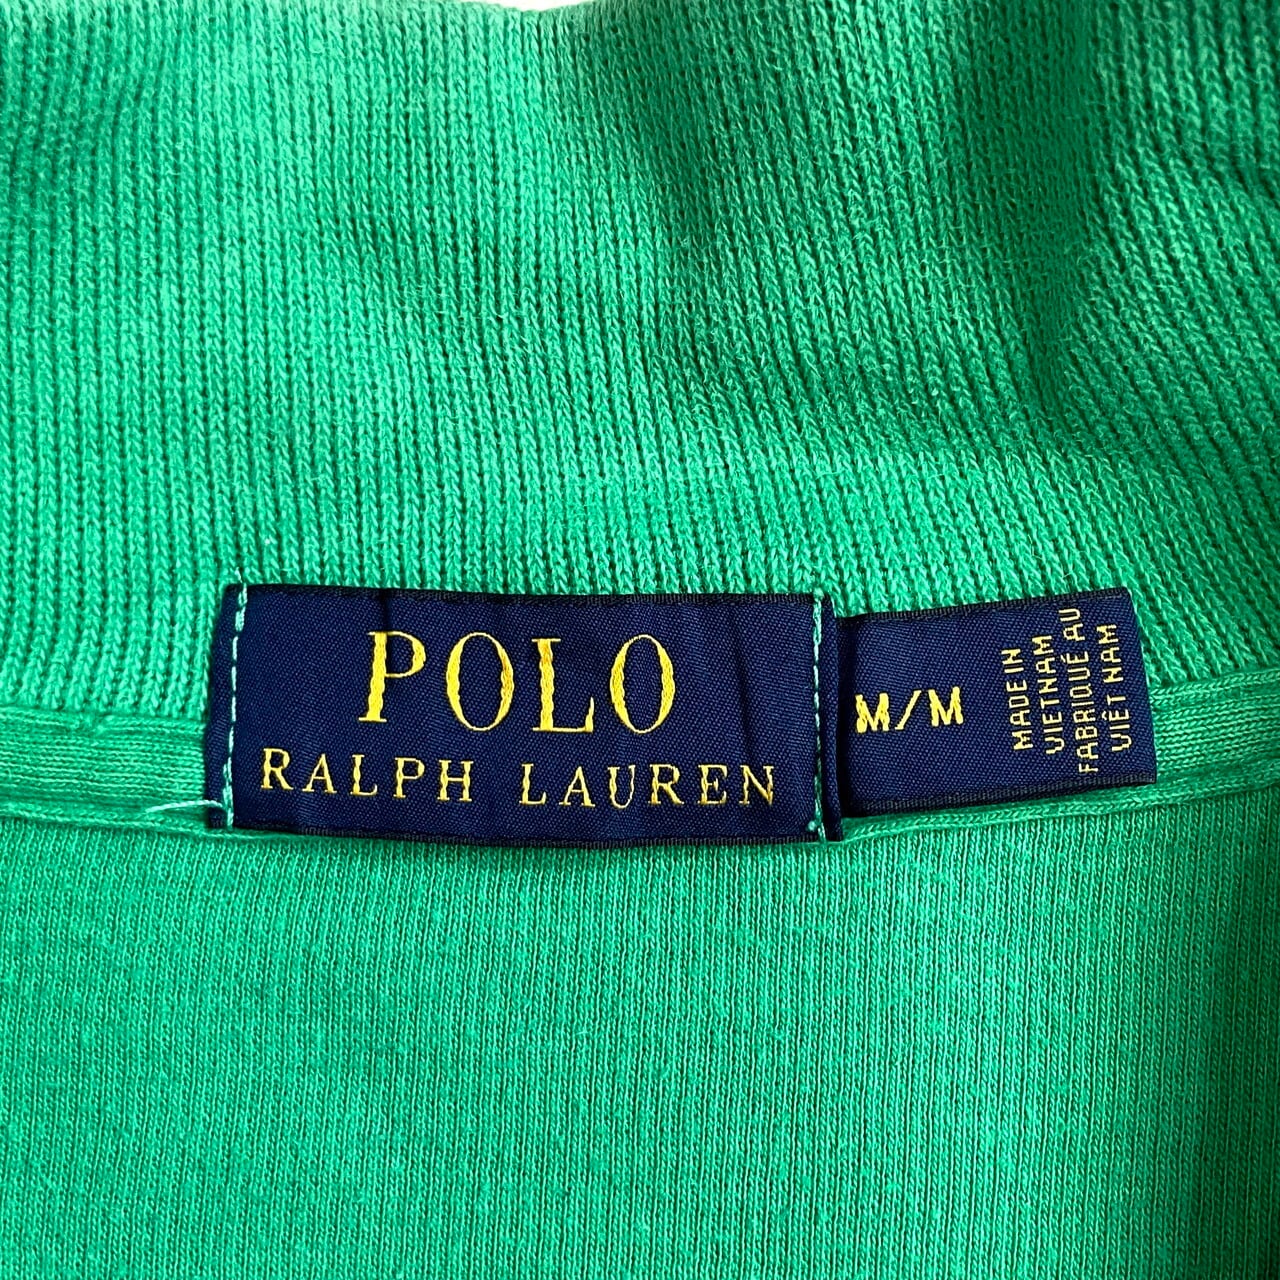 Polo Ralph Lauren ポロ ラルフローレン ワンポイントロゴ 刺繍 ハーフ ...